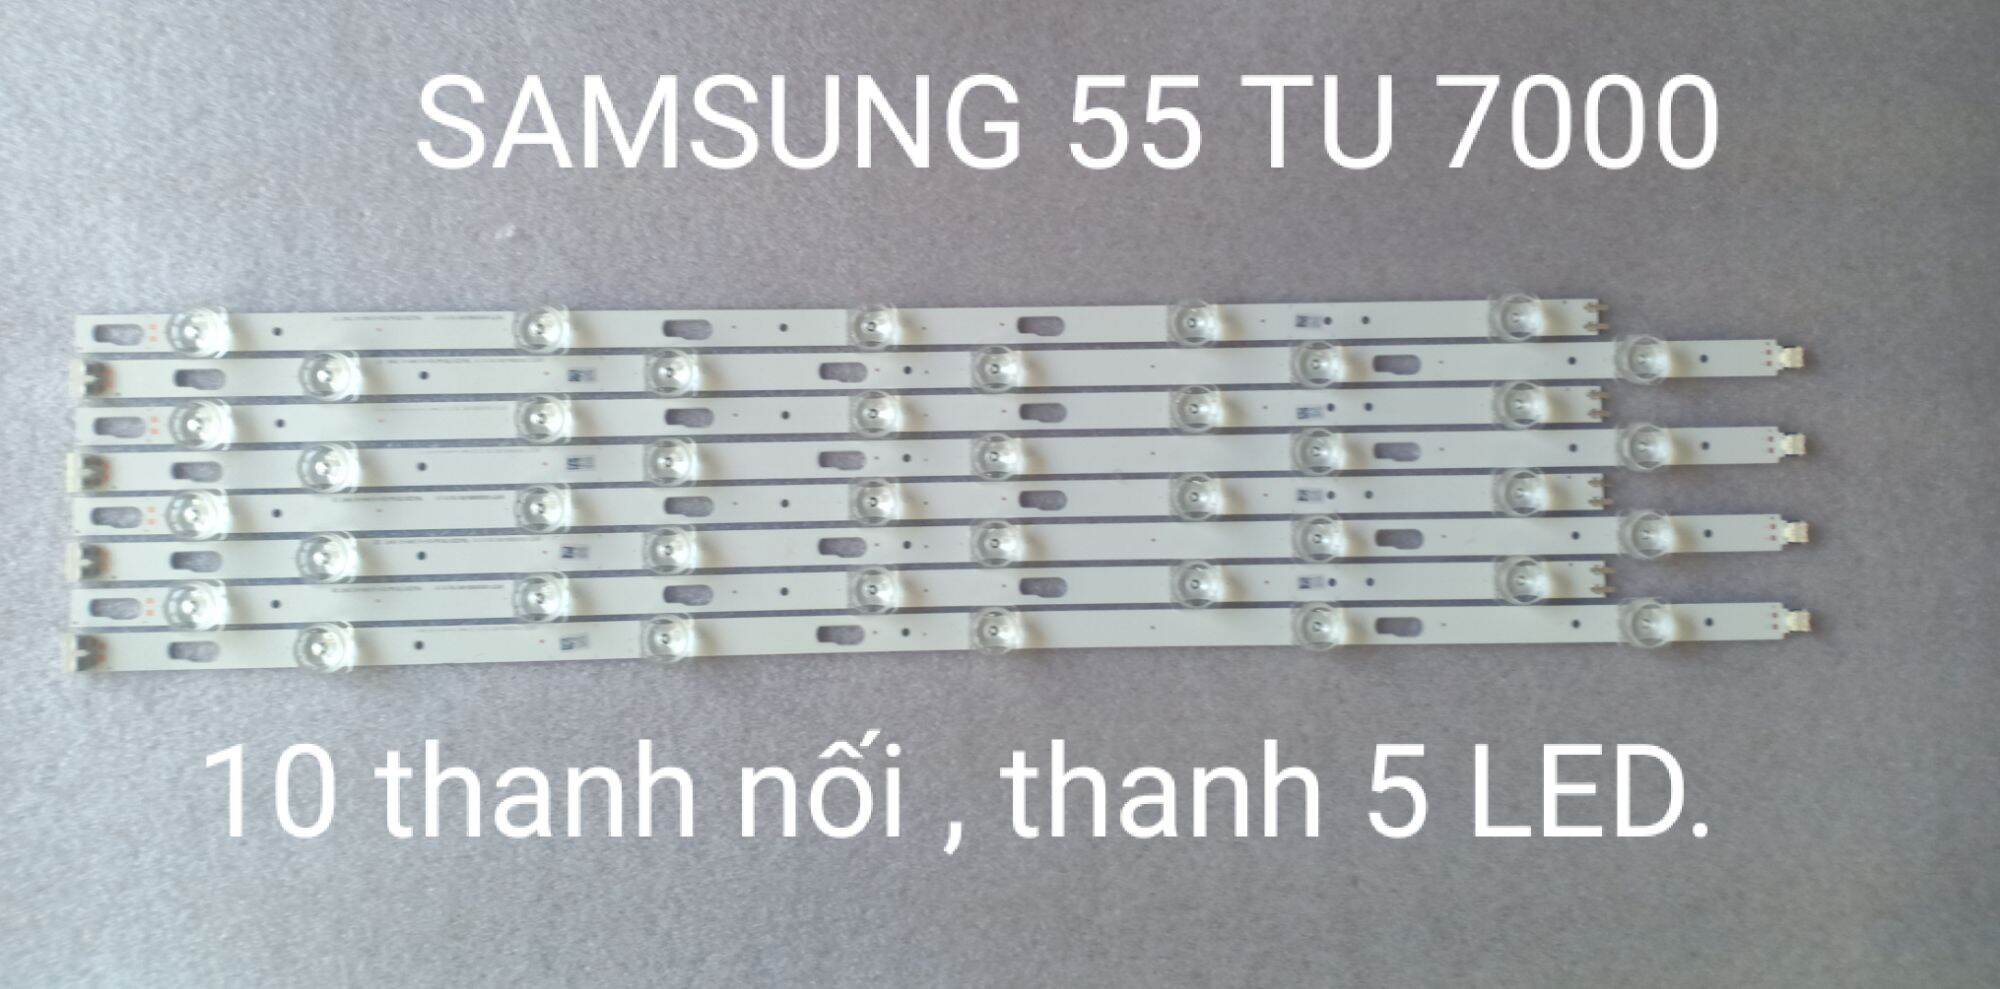 SAMSUNG 55 TU 7000 10 thanh nối , thanh 5 LED,,